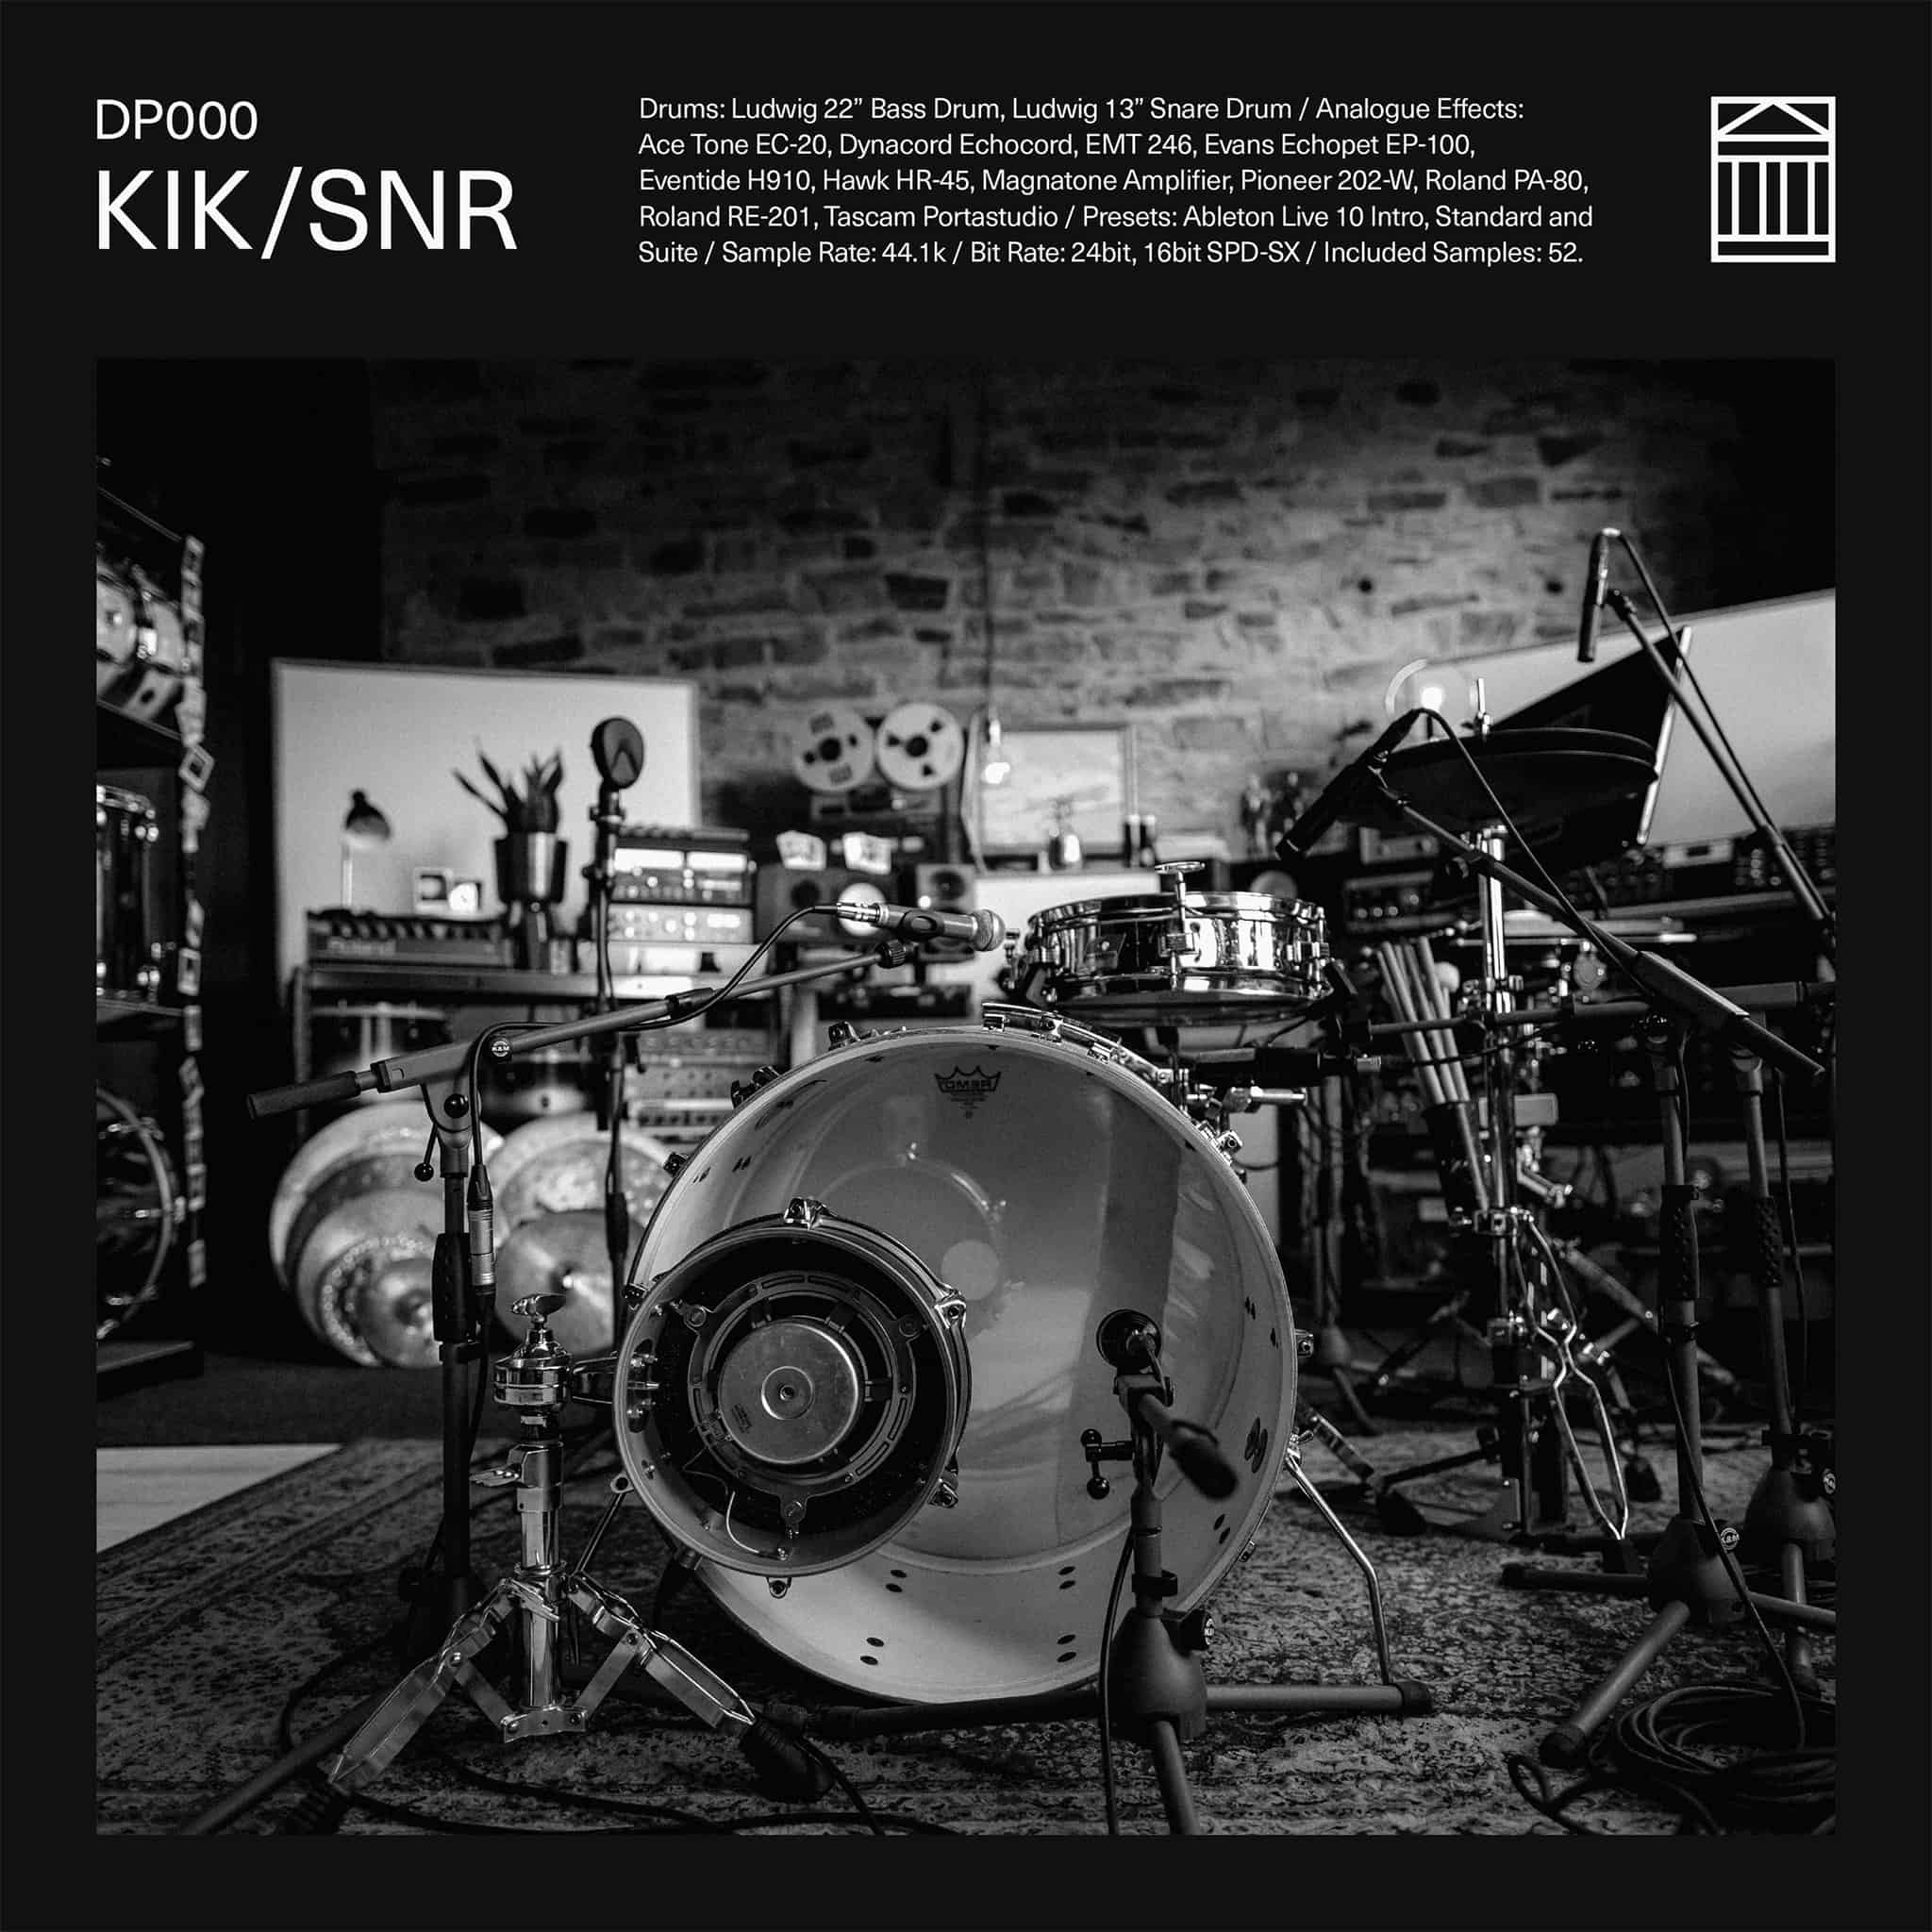 DP000 – KIK/SNR – Vintage 1960’s Kick and a 70’s Snare